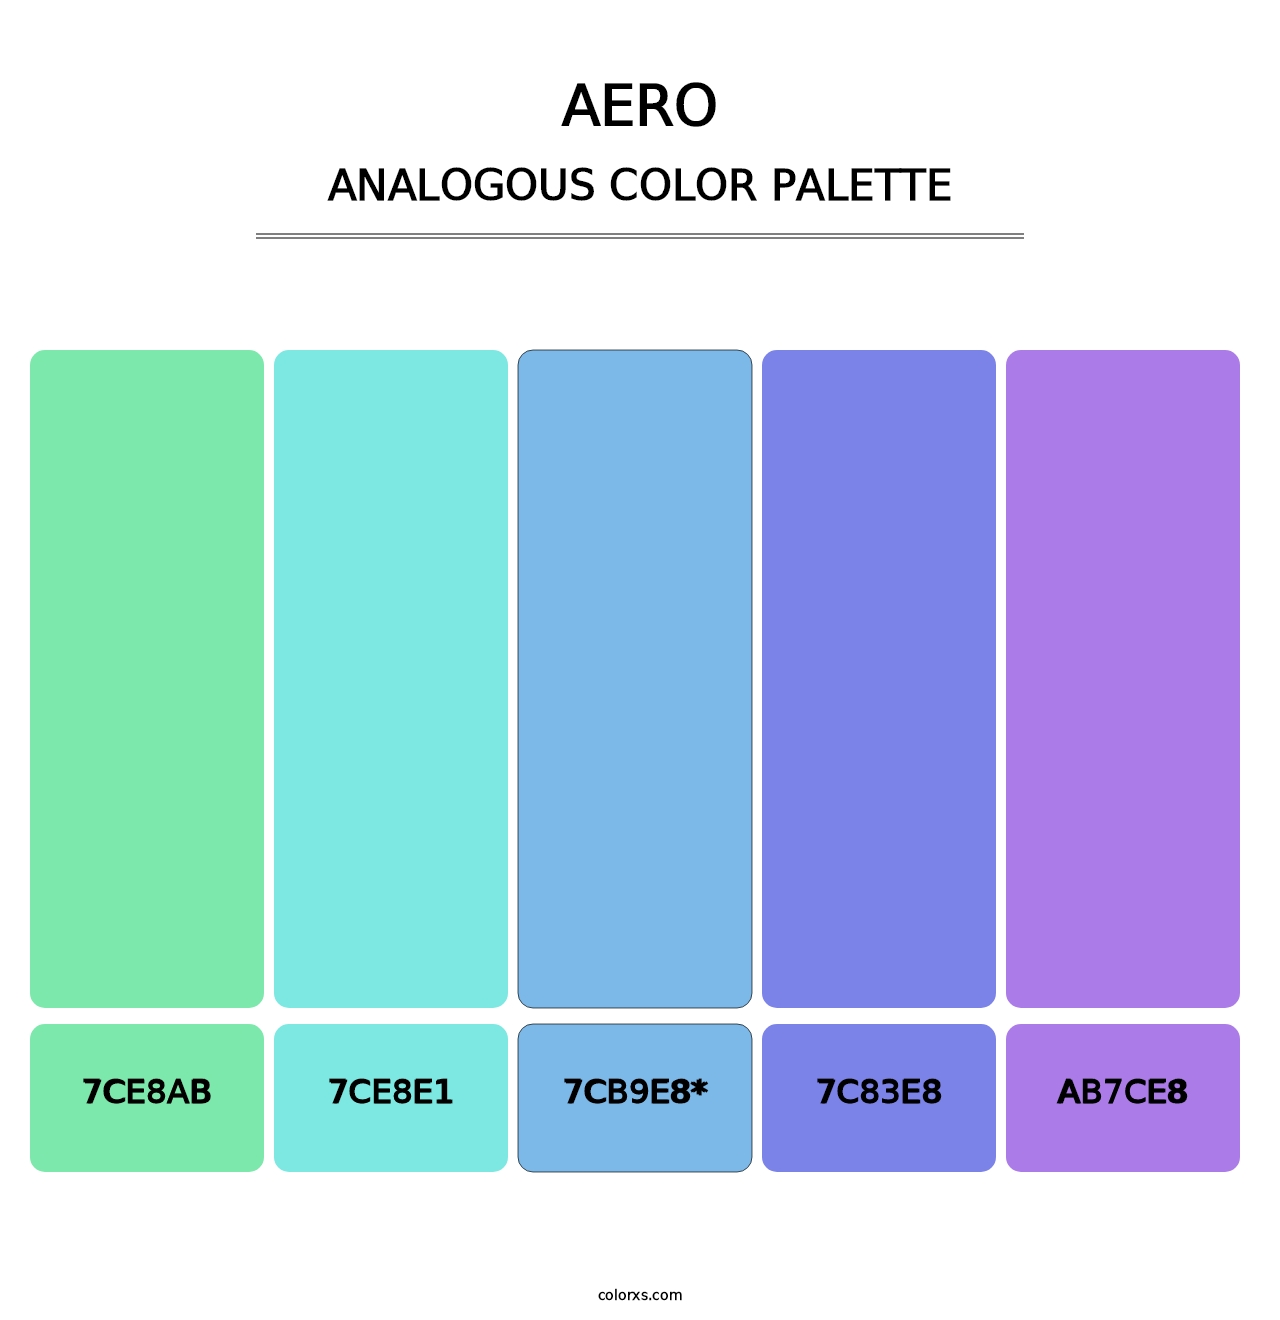 Aero - Analogous Color Palette